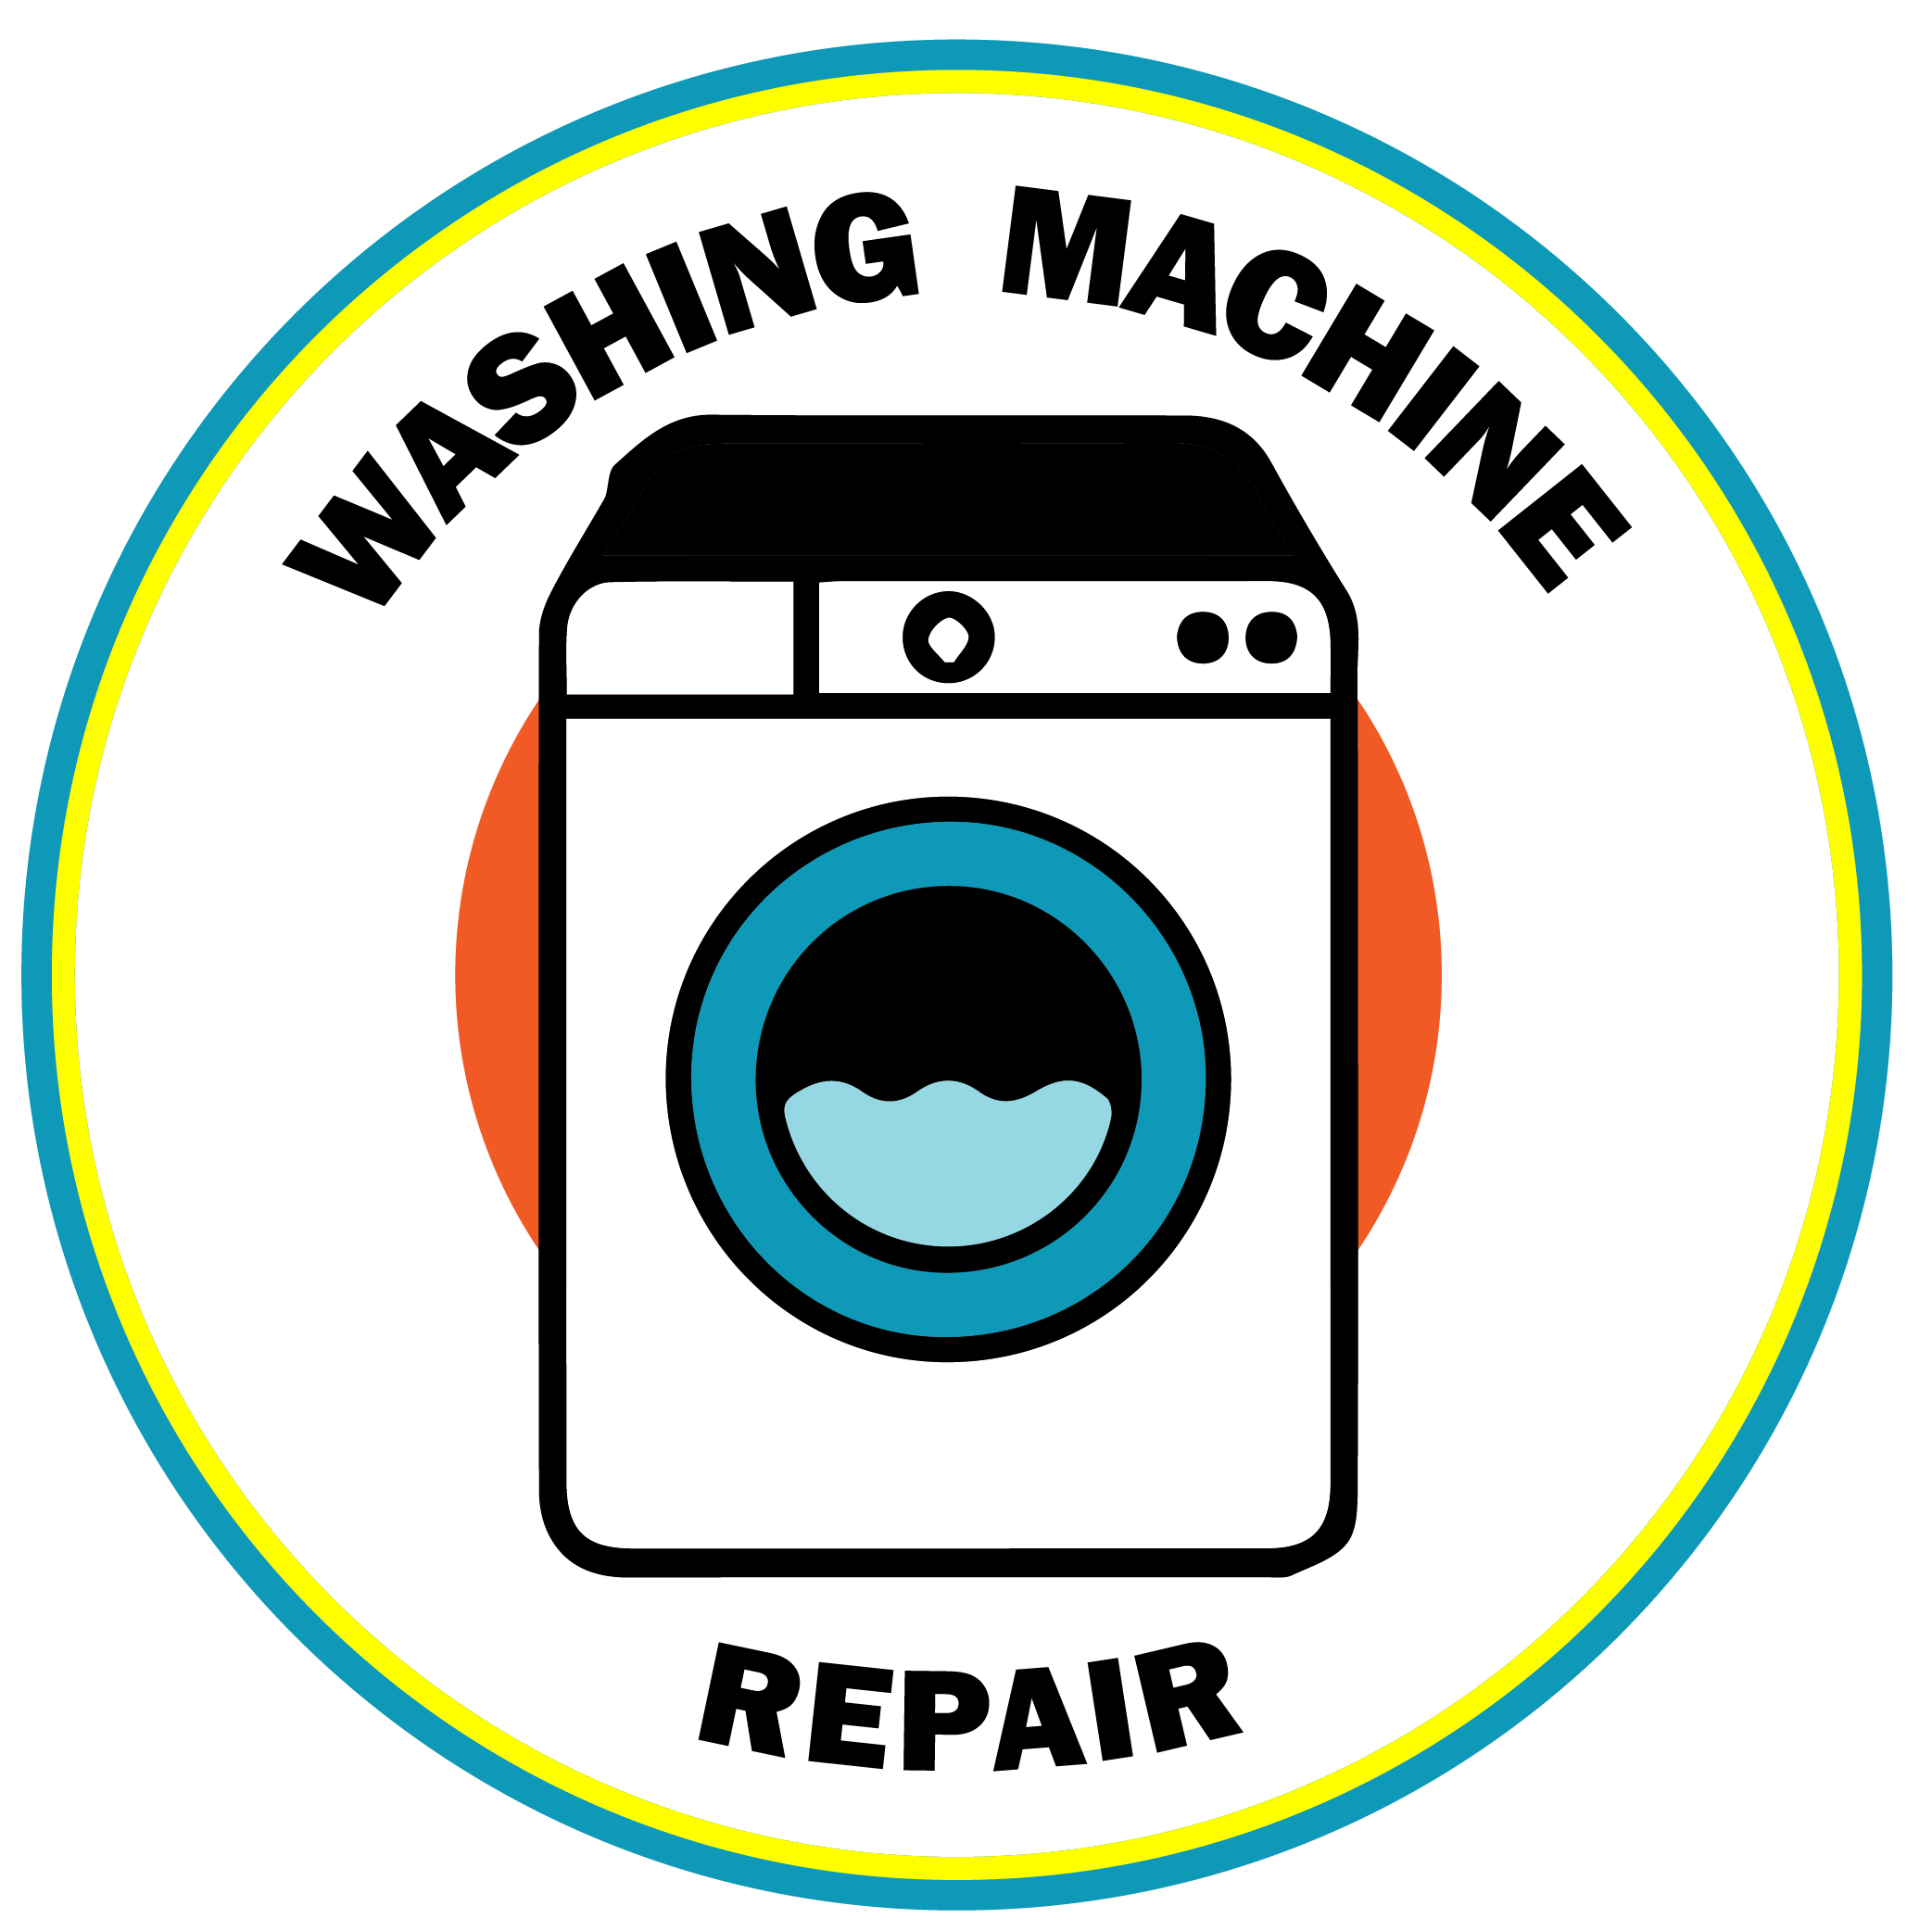 Washing Machine Repair in Dubai logo